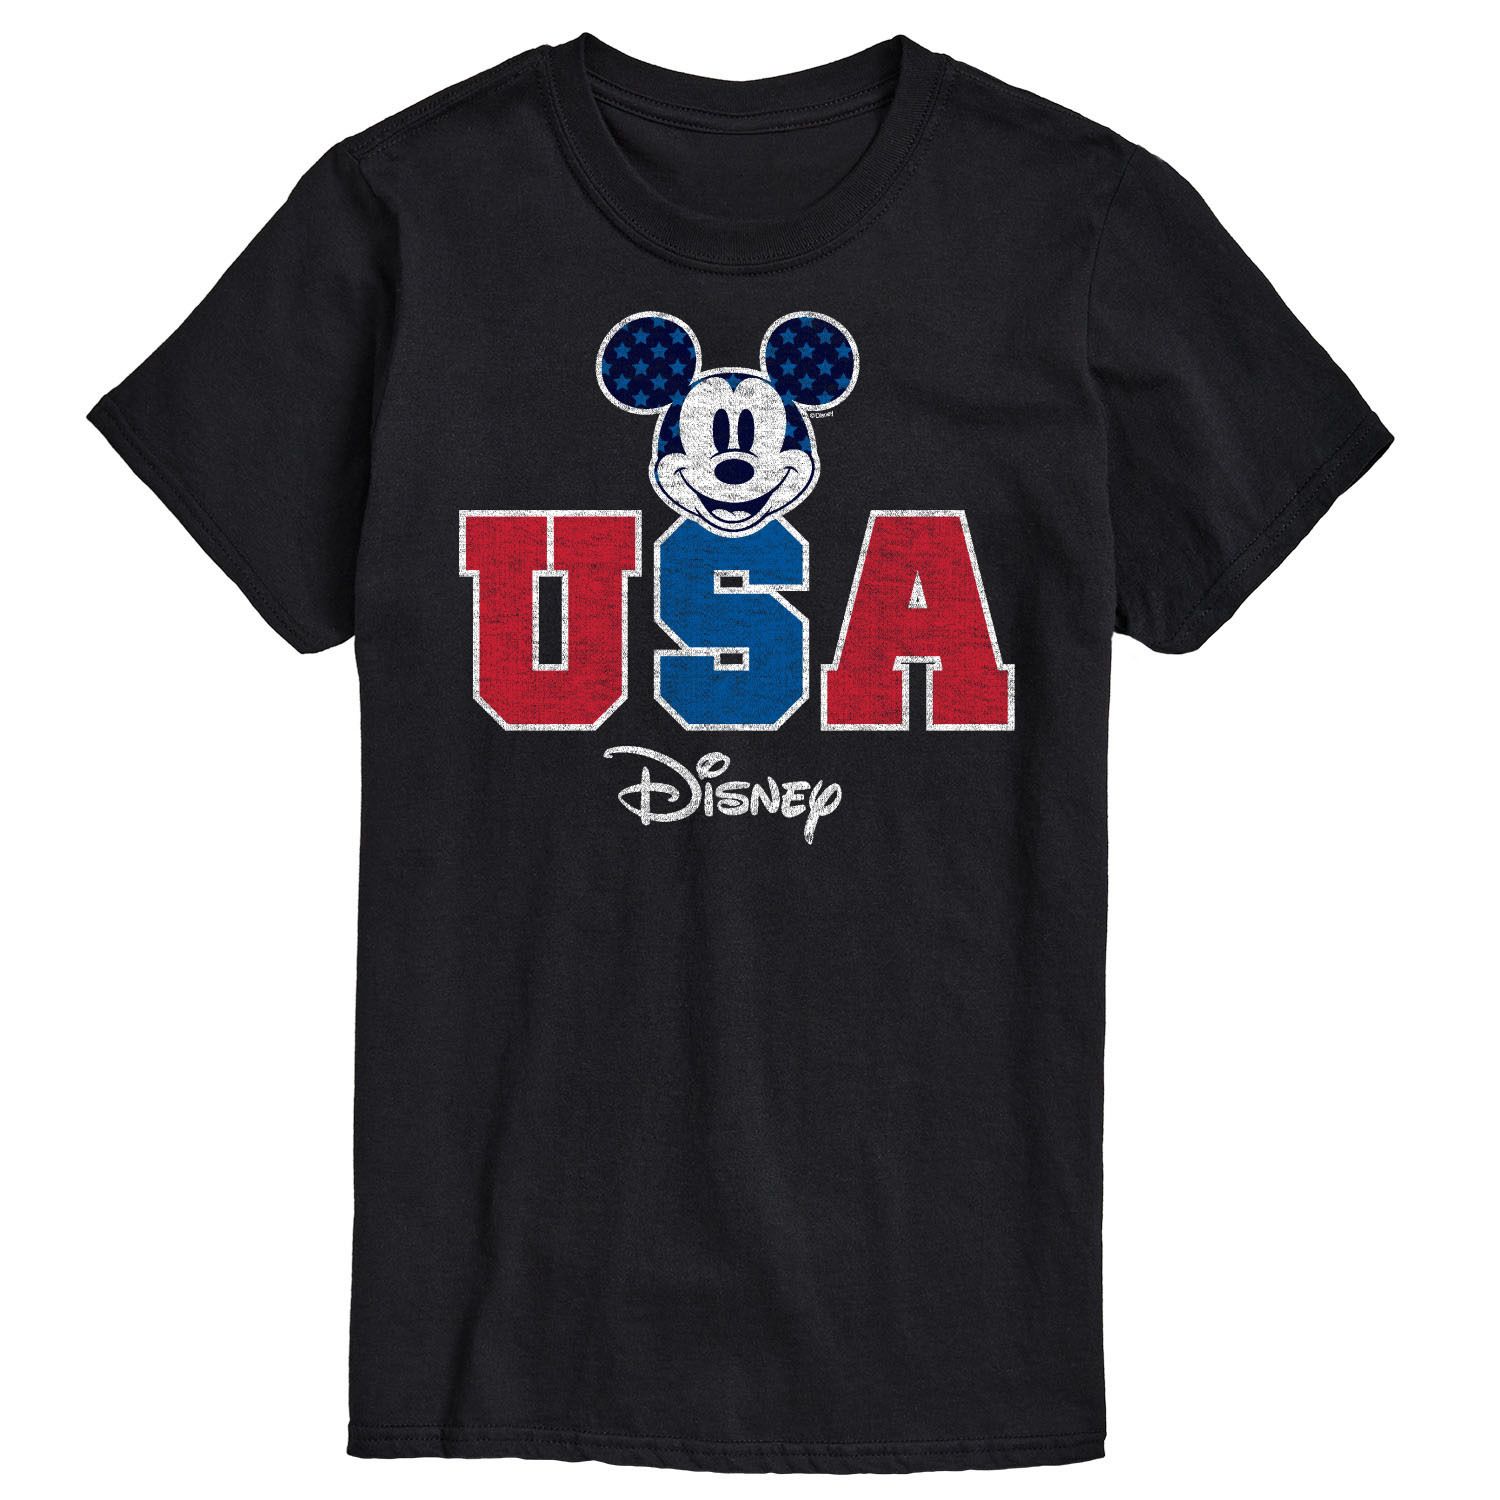 Мужская футболка с рисунком Микки Мауса Disney's США мужская футболка с рисунком микки hybrid серый